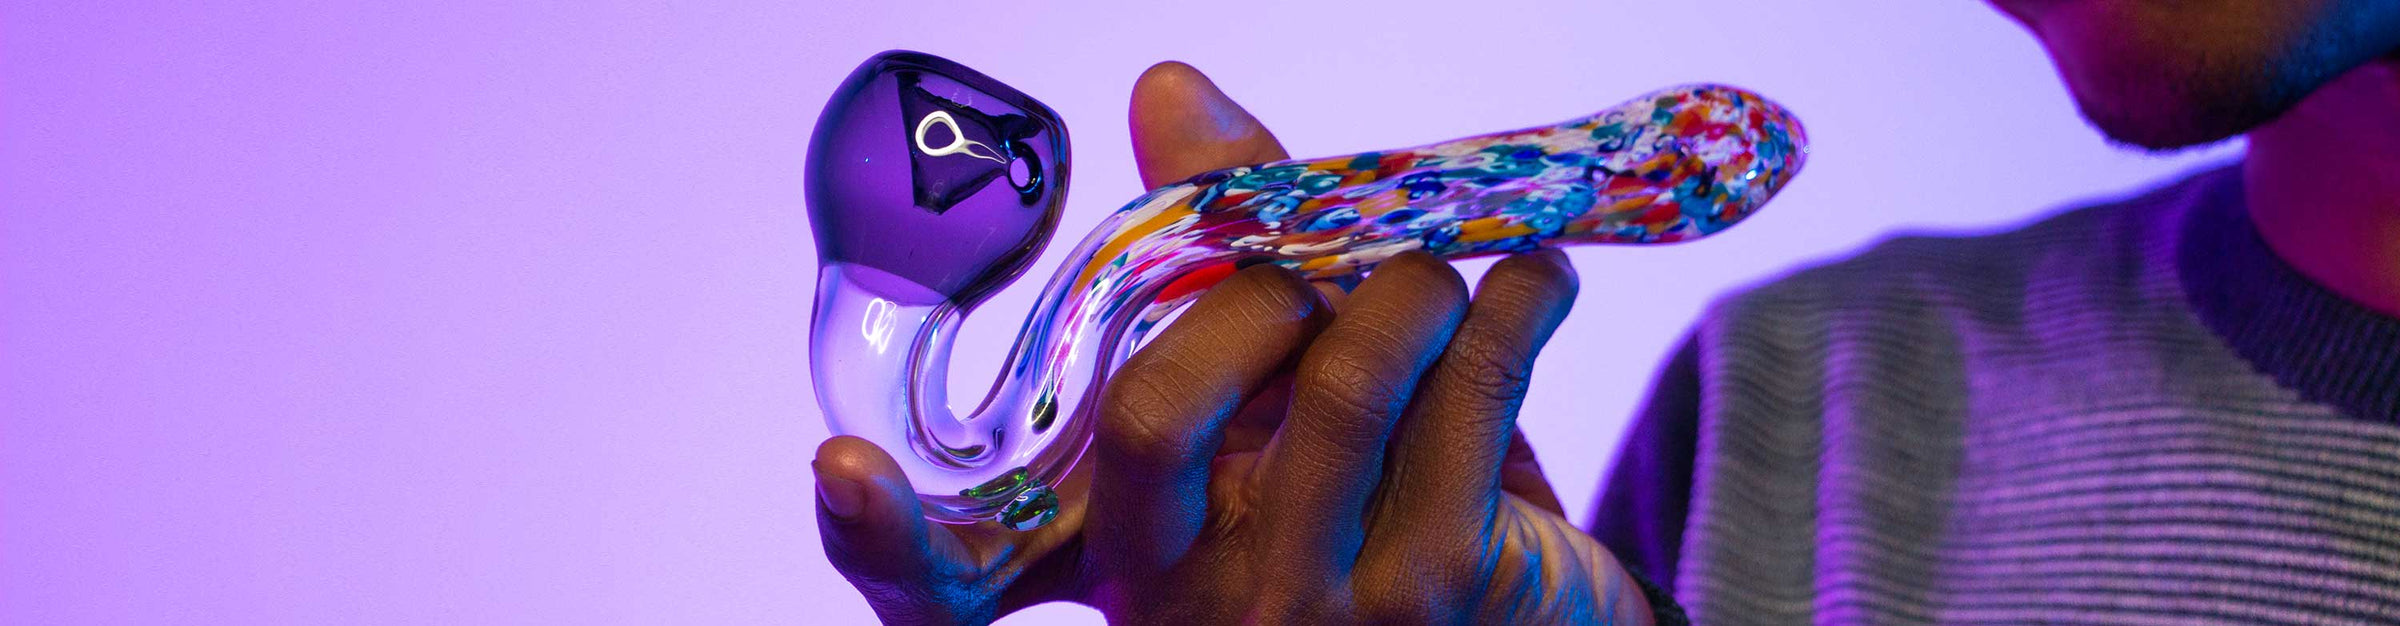 Man holding Sherlock Hand Pipe inside studio with purple lighting